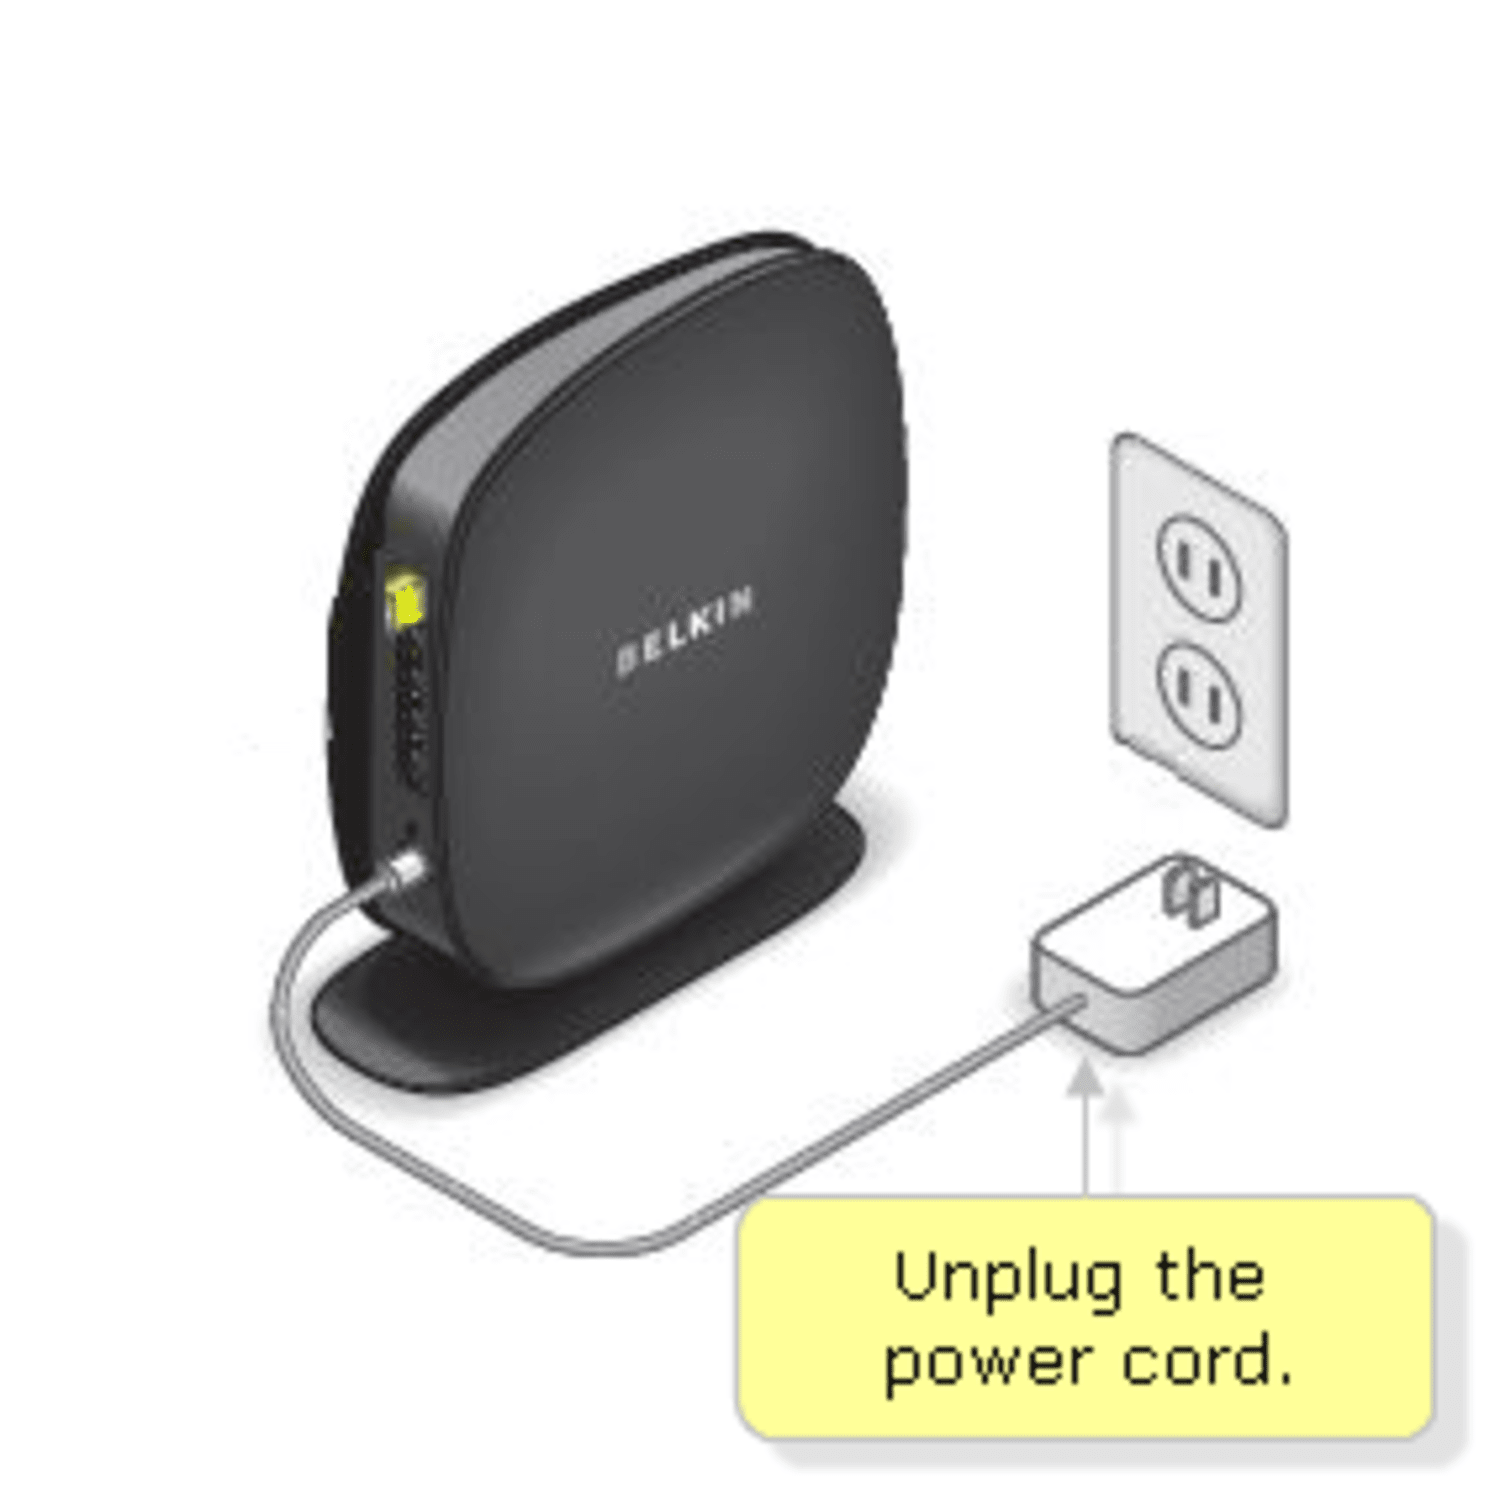 unplug the cord